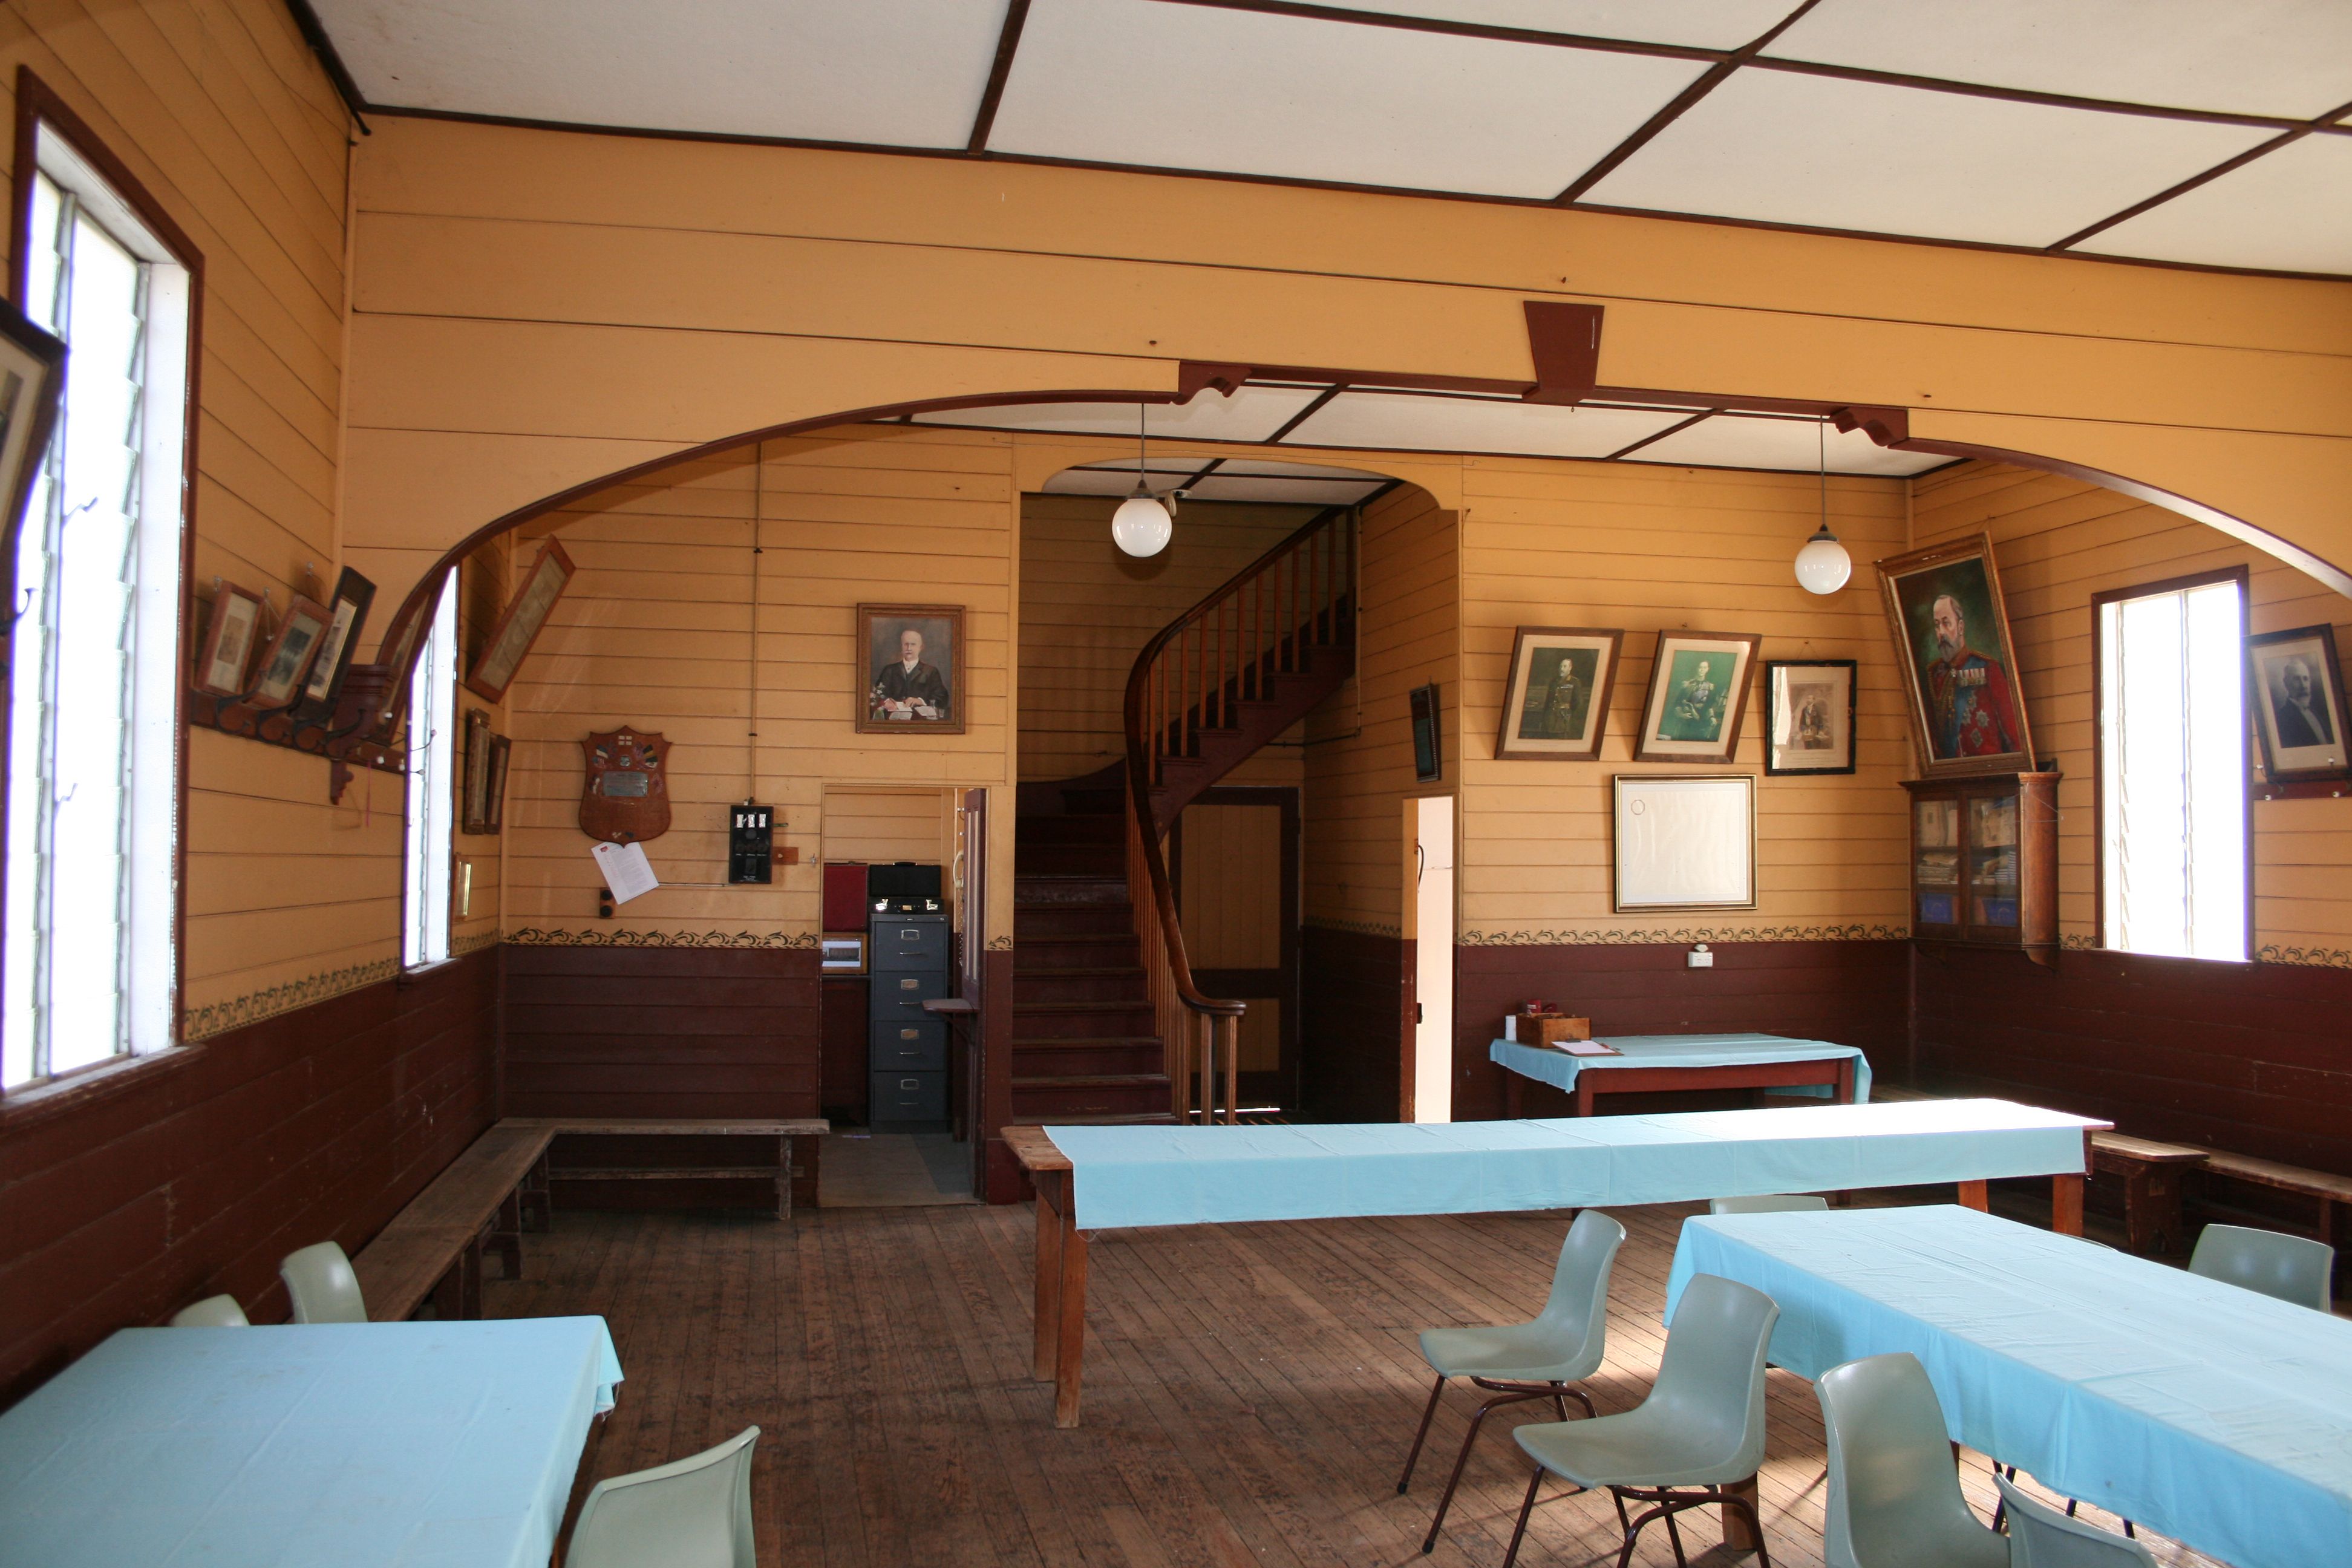 The Barcaldine Masonc Temple's interior – the home of Comet Masonic Lodge since 1901